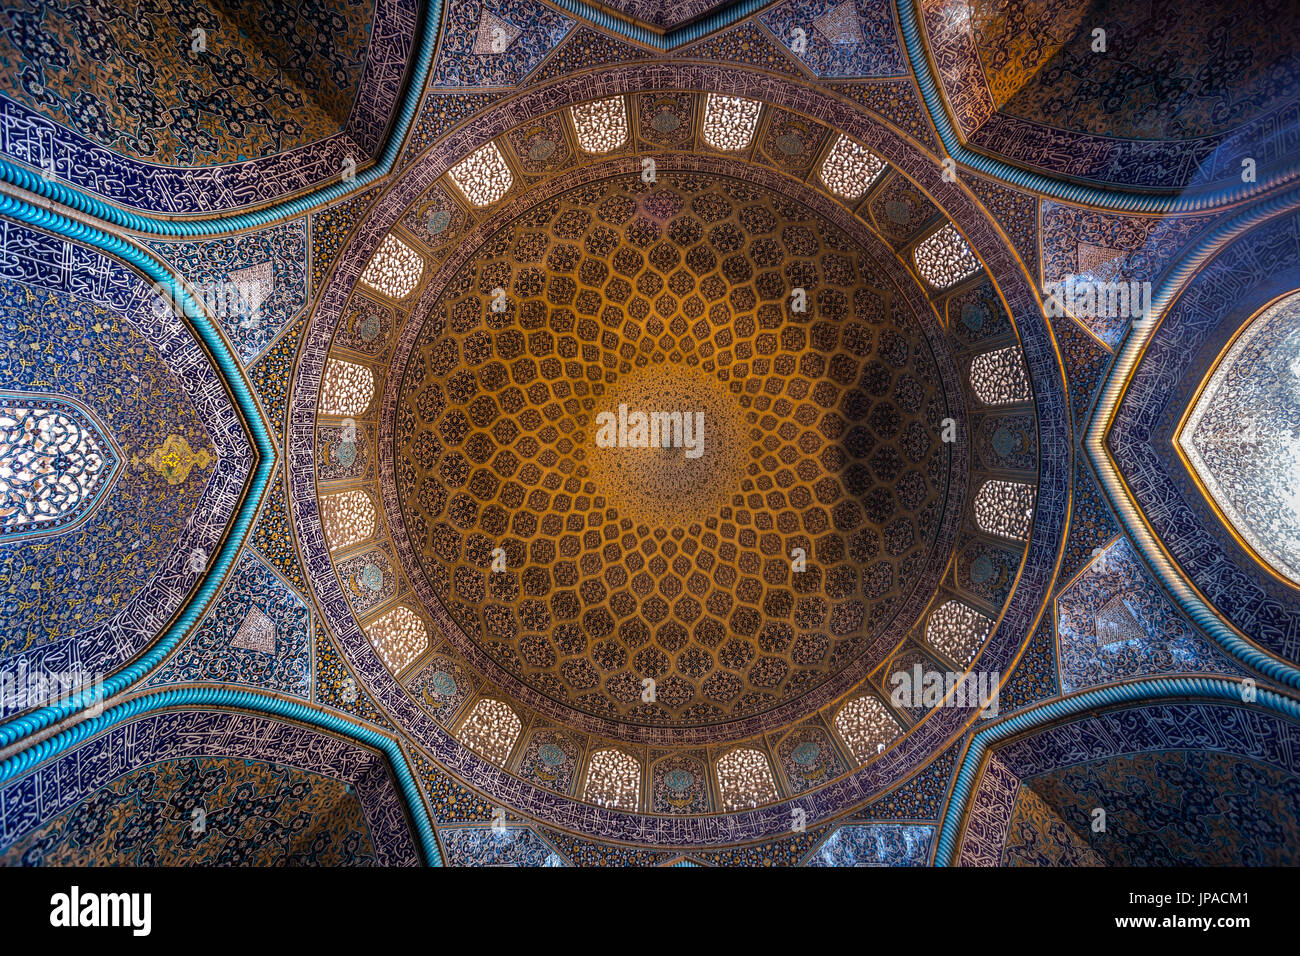 Iran, Esfahan Città, Naqsh-e JAHAN Piazza, Sceicco Lotfollah moschea, interno Foto Stock